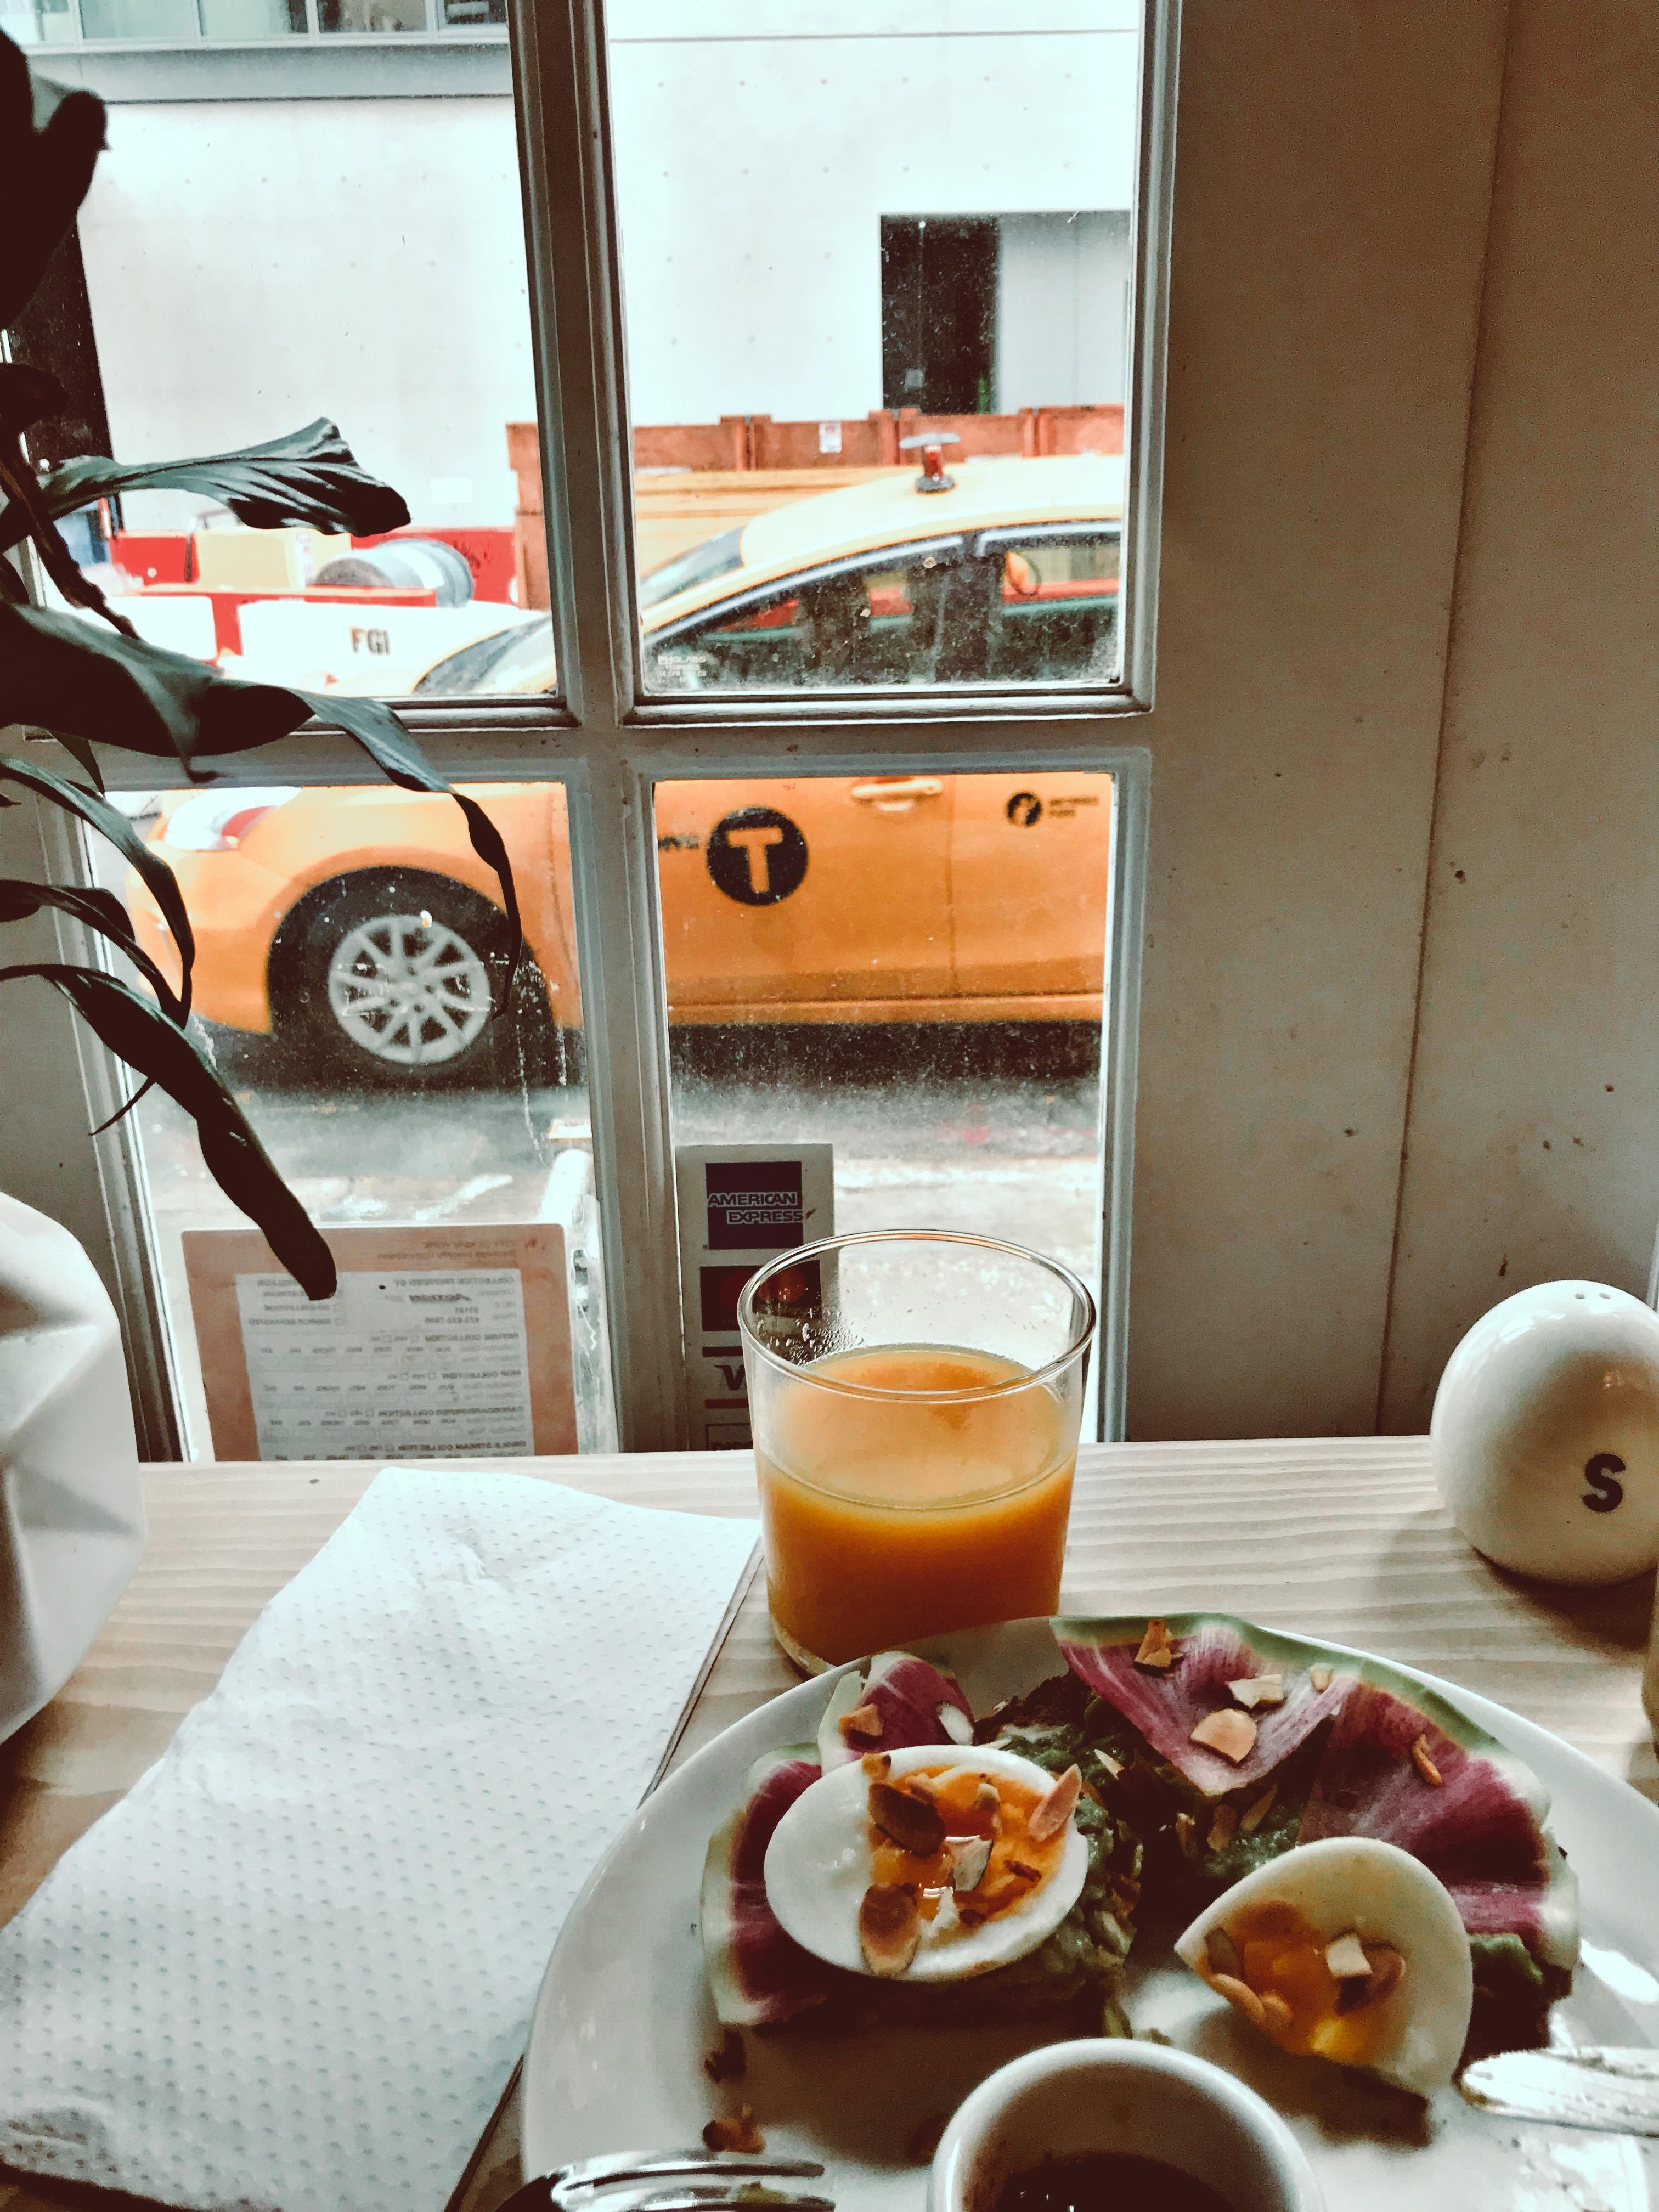 I swear: it was Friday like... 5 minutes ago #monday #breakfast #soho #newyork #travel 